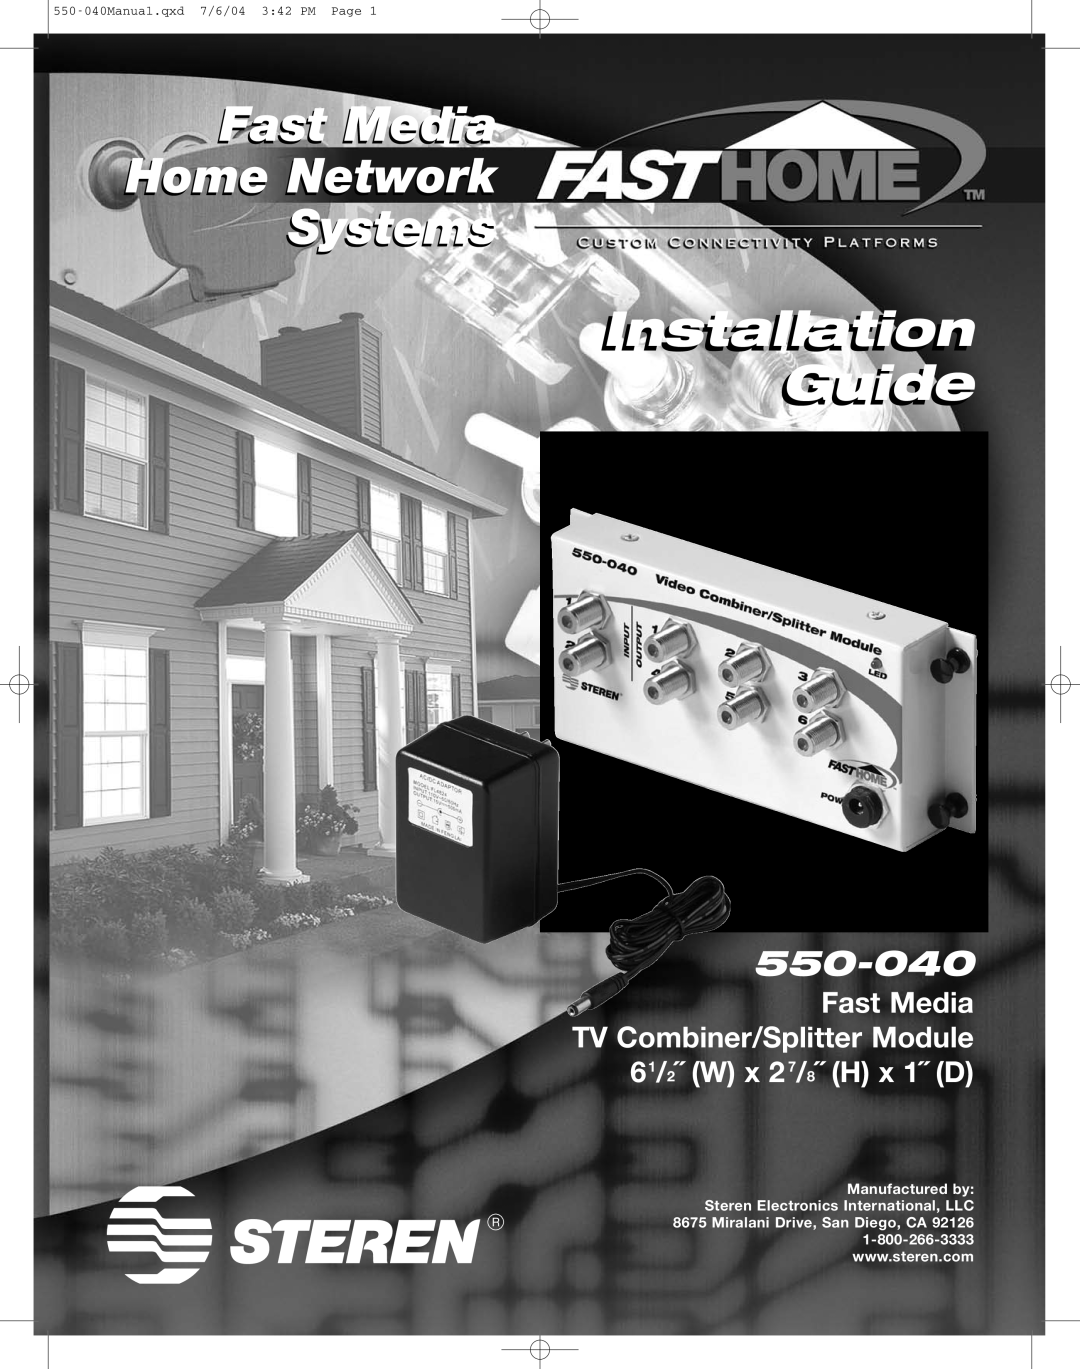 Steren 550-040 manual Fast Media Home Network Systems, Installationll Guidei, Fast Media TV Combiner/Splitter Module 